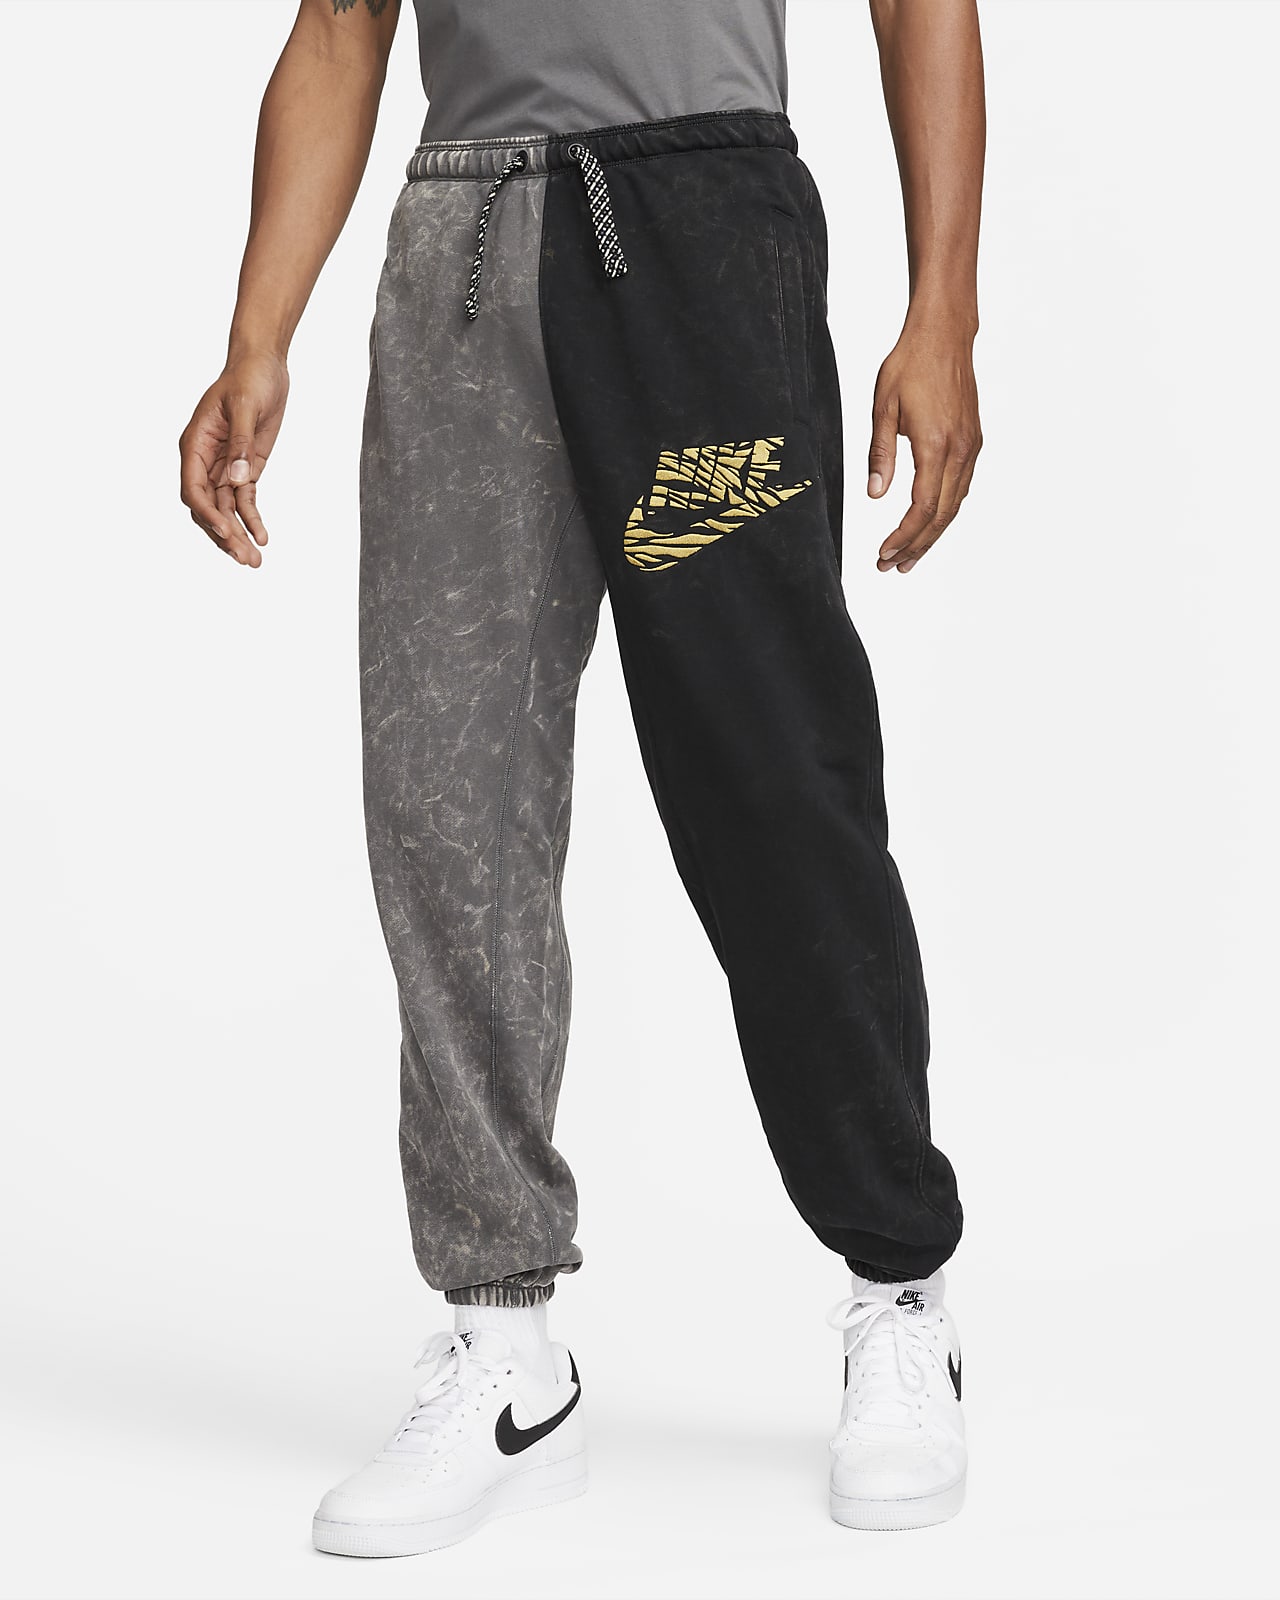 Pants de básquetbol premium para hombre Nike Dri-FIT Standard Issue